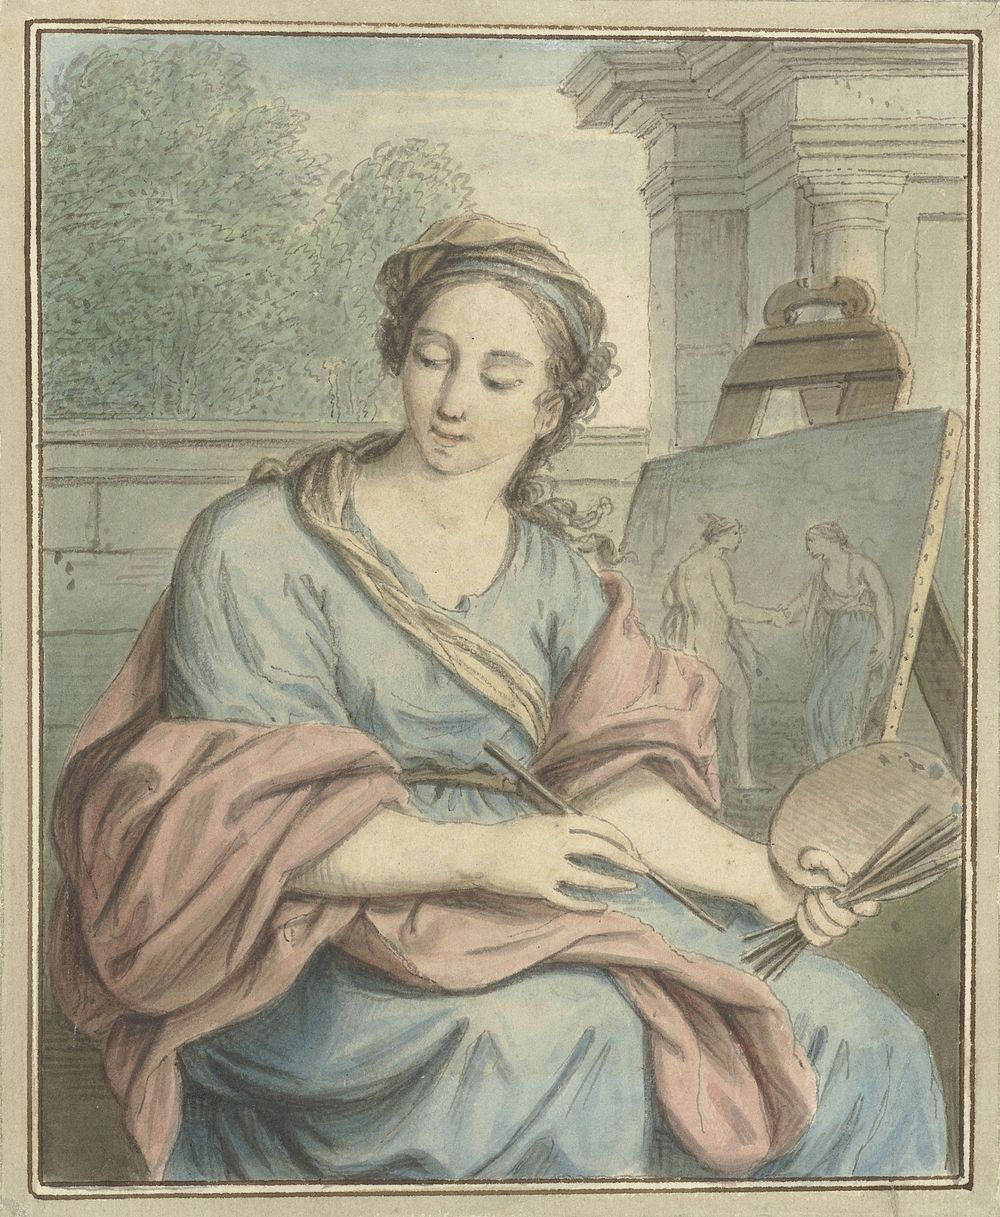 De Schilderkunst (1703 - 1775) by Louis Fabritius Dubourg